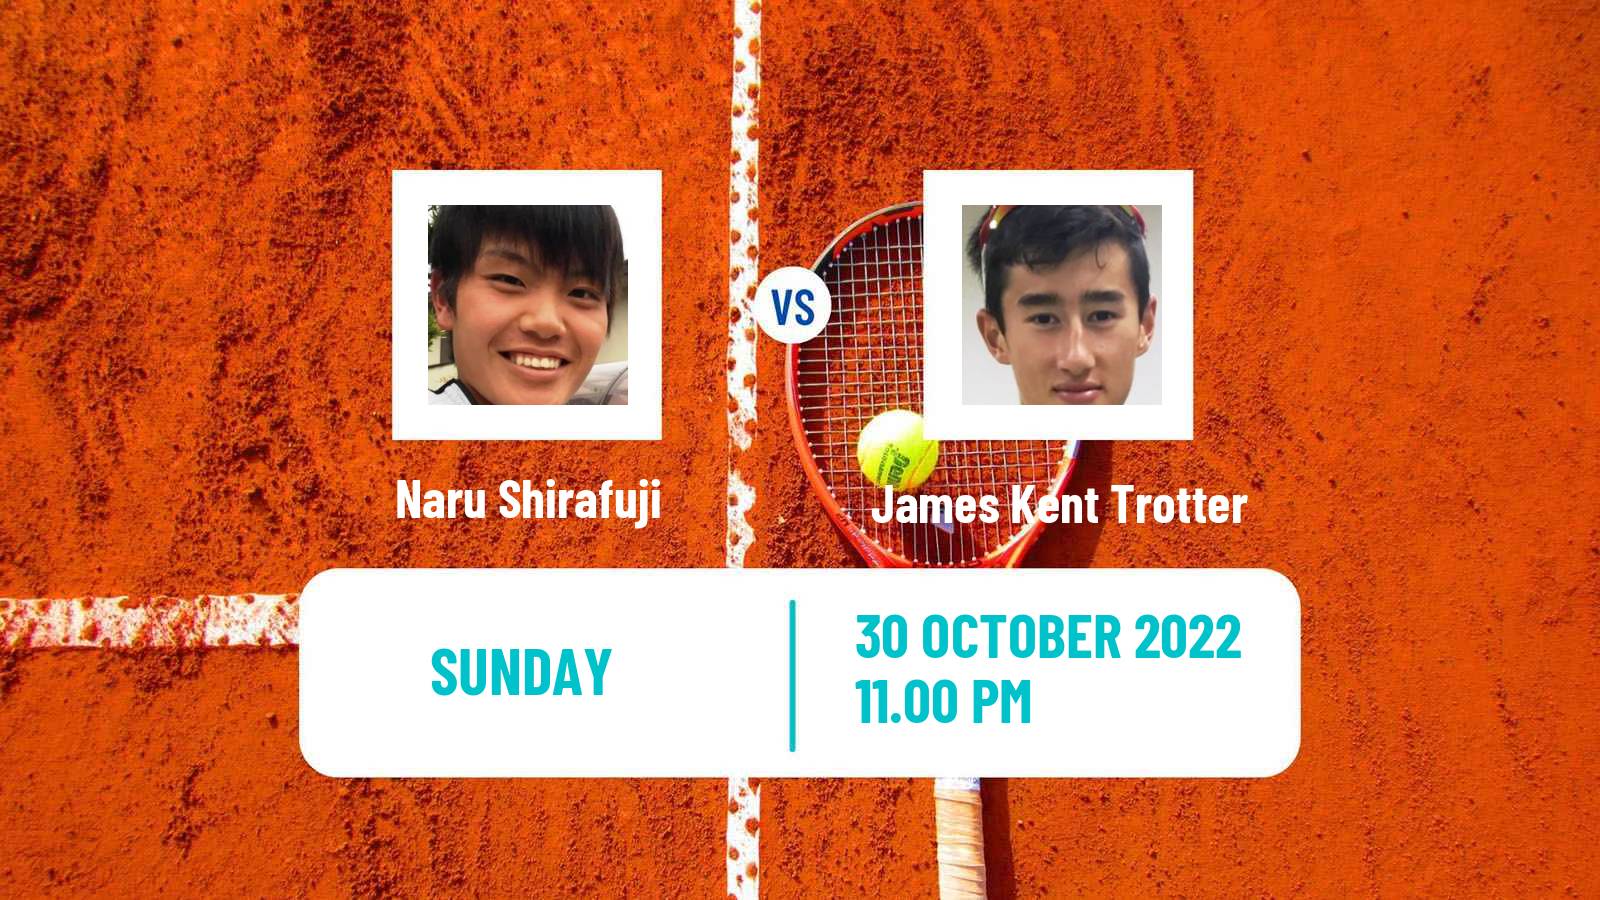 Tennis ATP Challenger Naru Shirafuji - James Kent Trotter